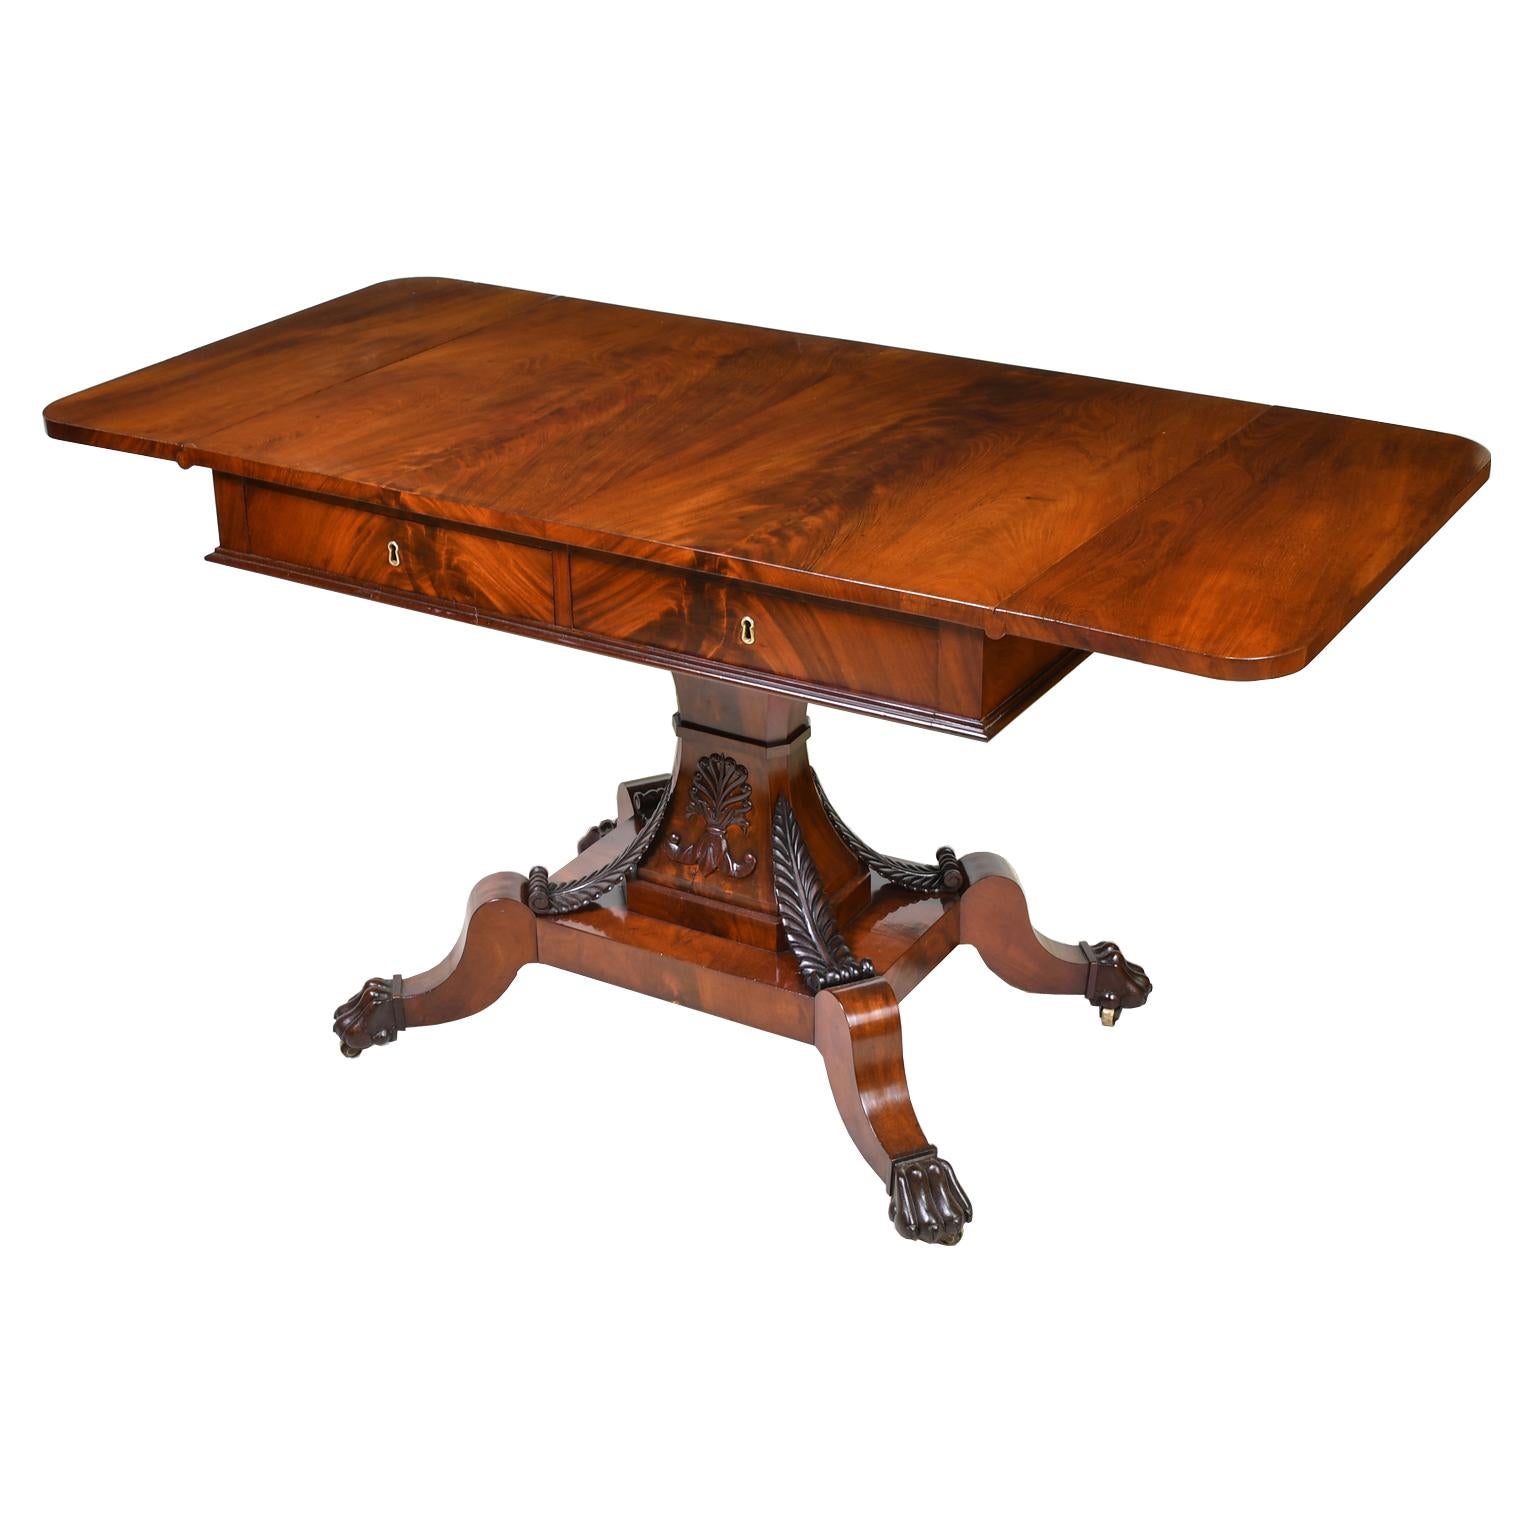  Swedish Karl Johan Salon/Sofa Table or Desk in West Indies Mahogany, c. 1825 For Sale 1